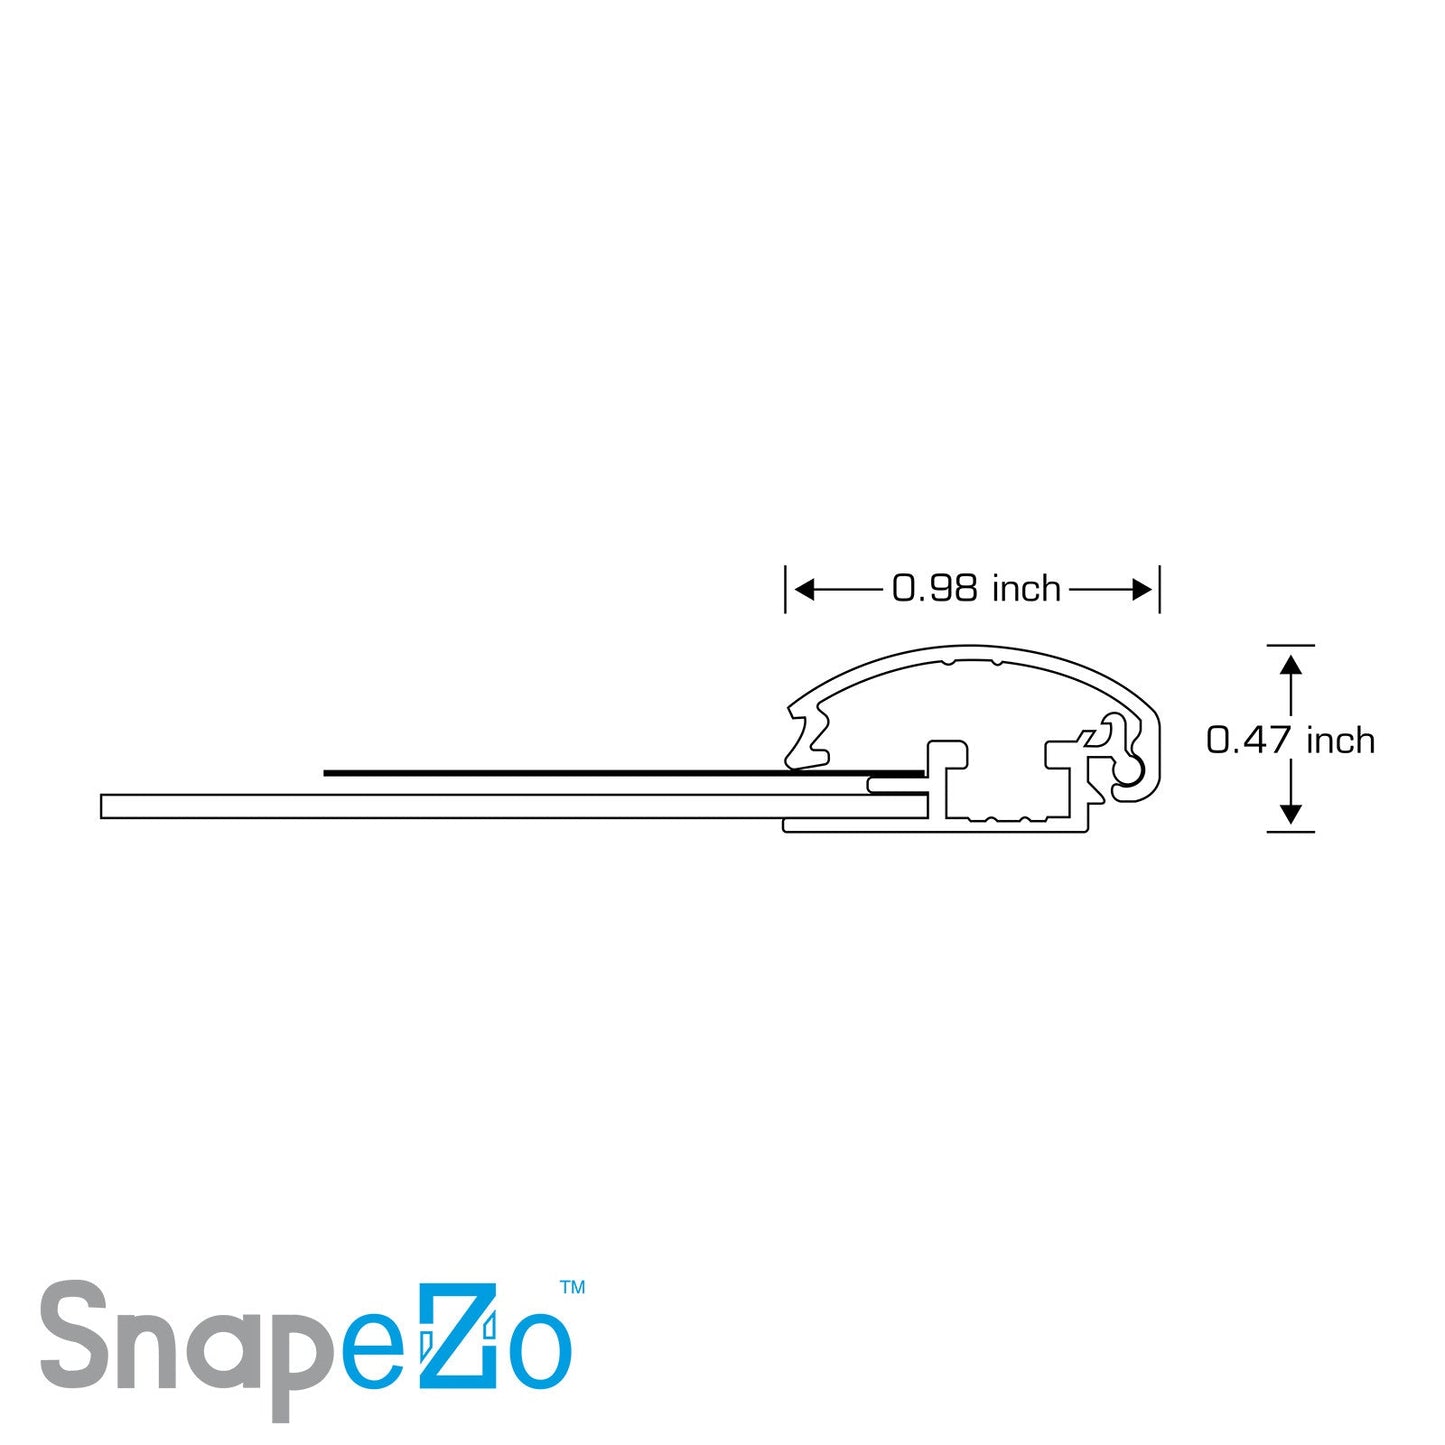 5x7 Silver SnapeZo® Snap Frame - 1" Profile